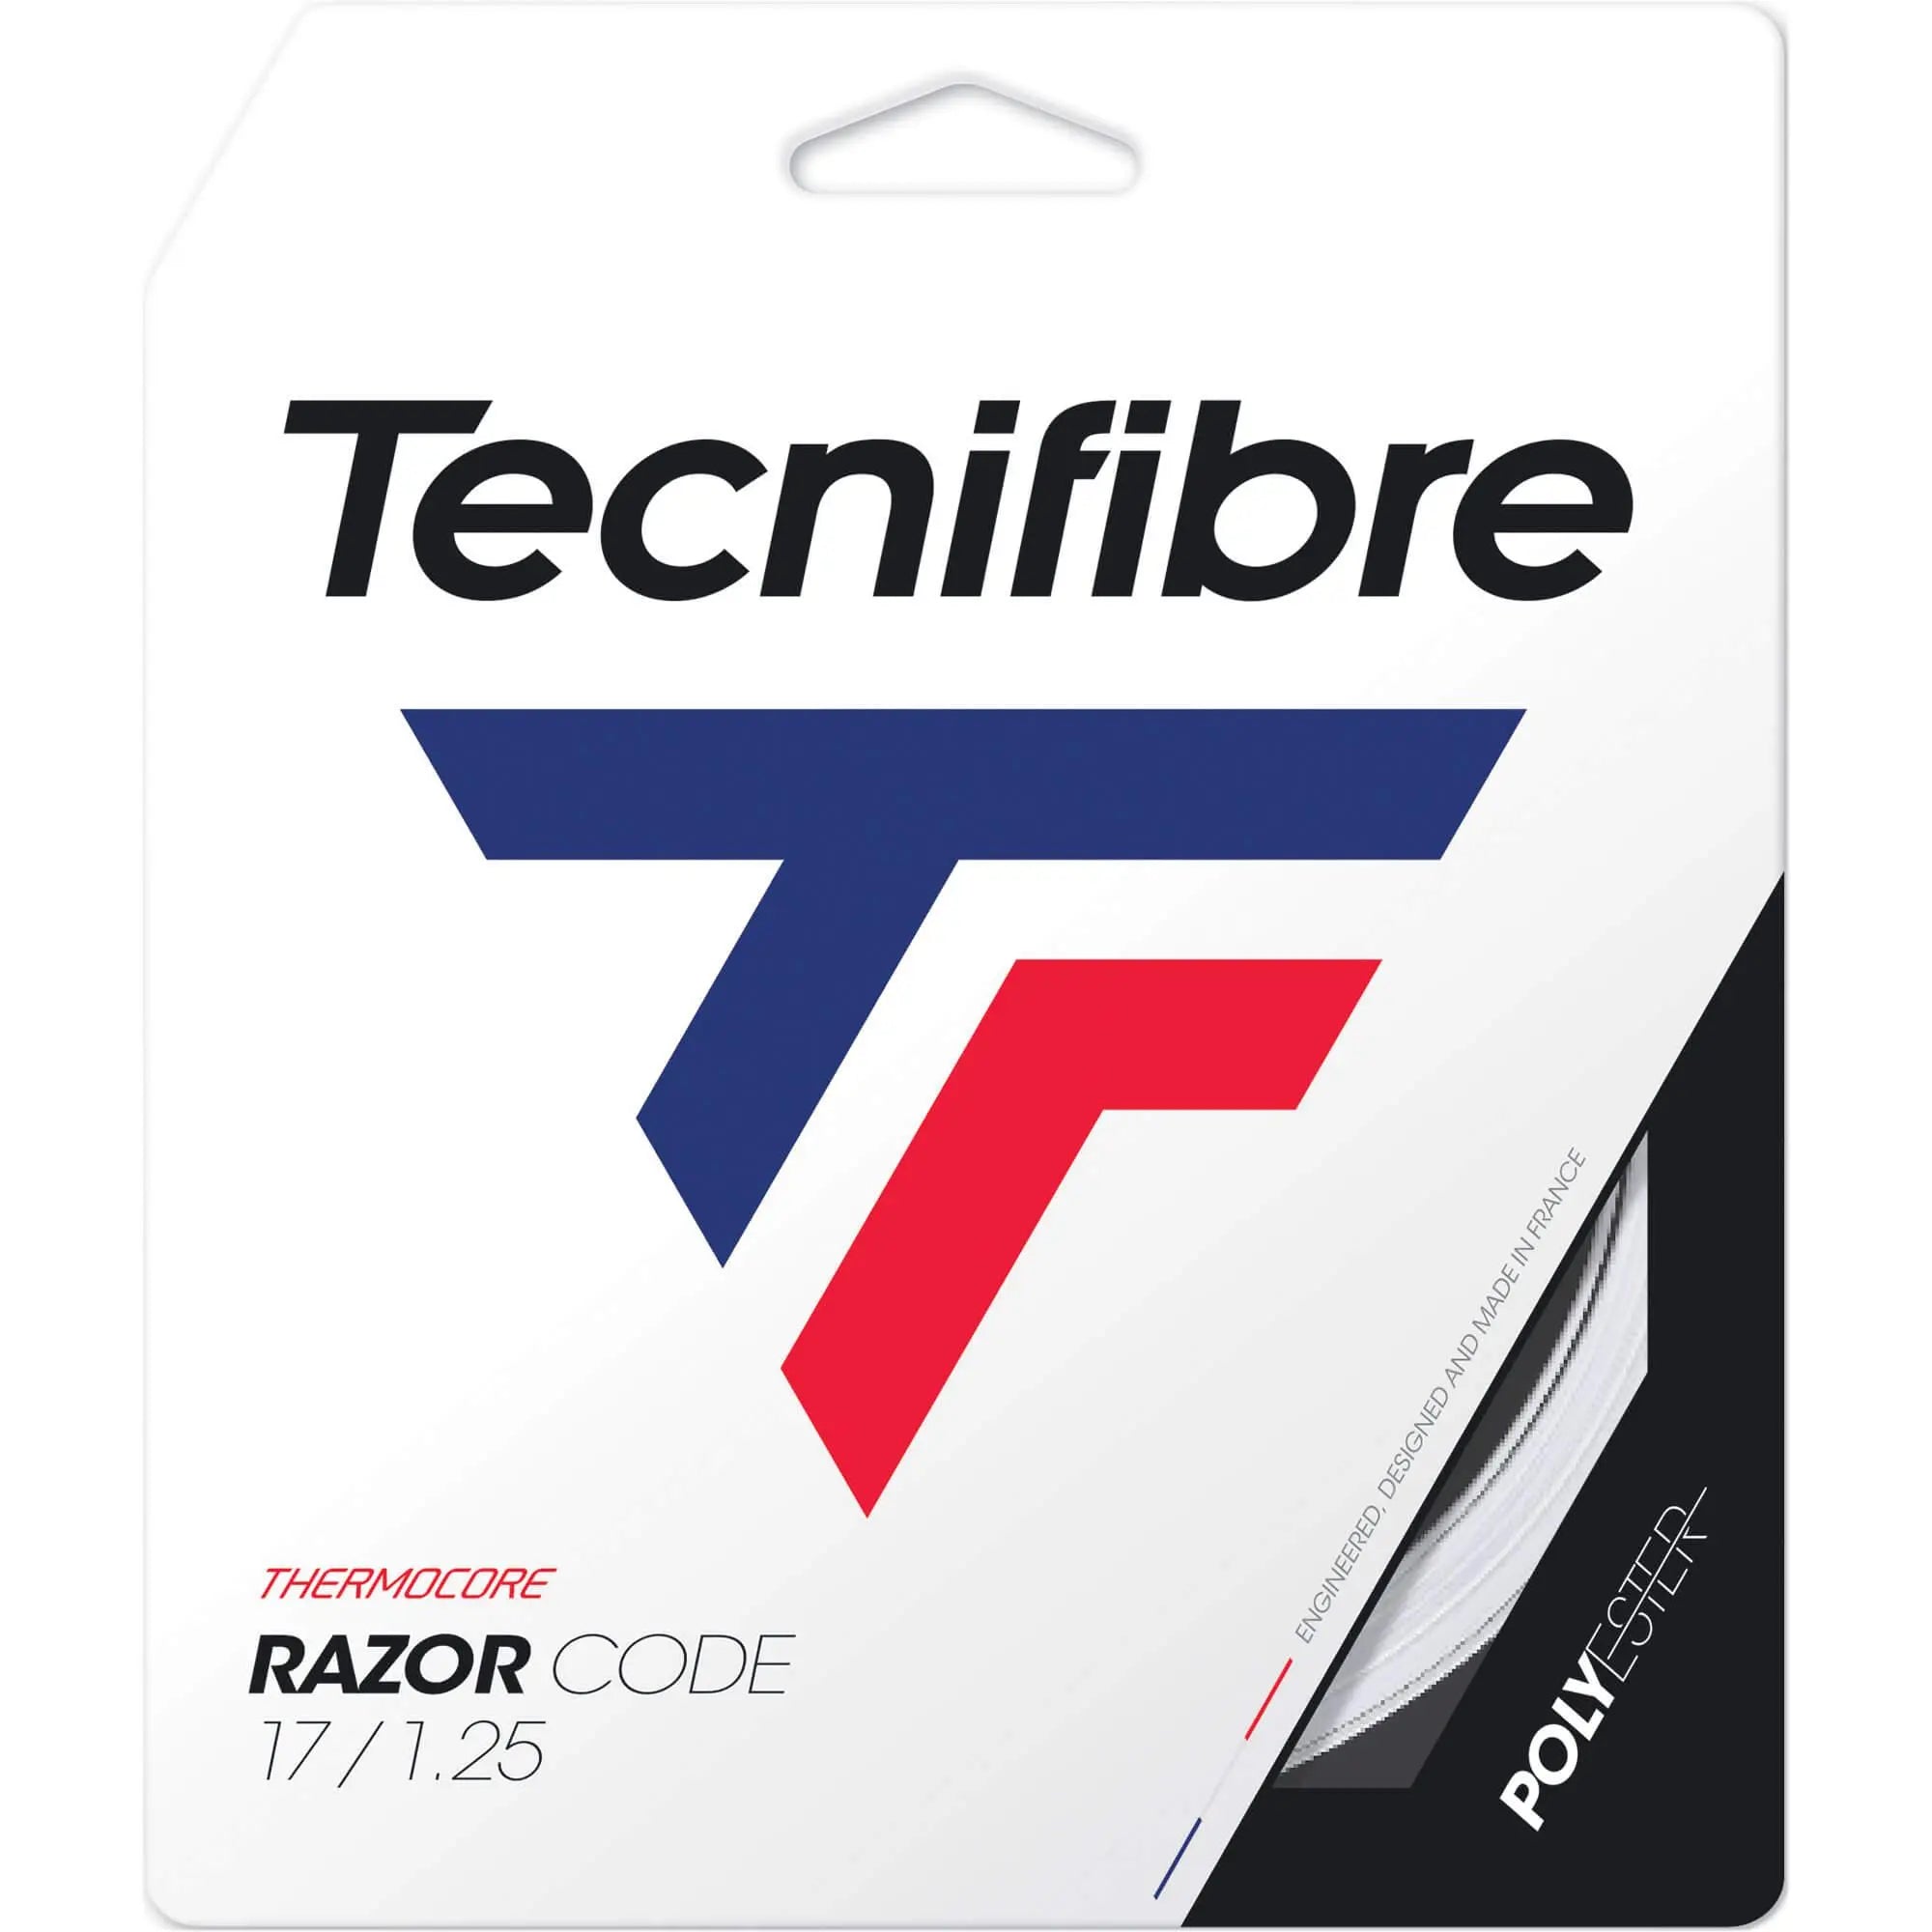 Tecnifibre Razor Code Tennis String - 1.25-The Racquet Shop-Shop Online in UAE, Saudi Arabia, Kuwait, Oman, Bahrain and Qatar